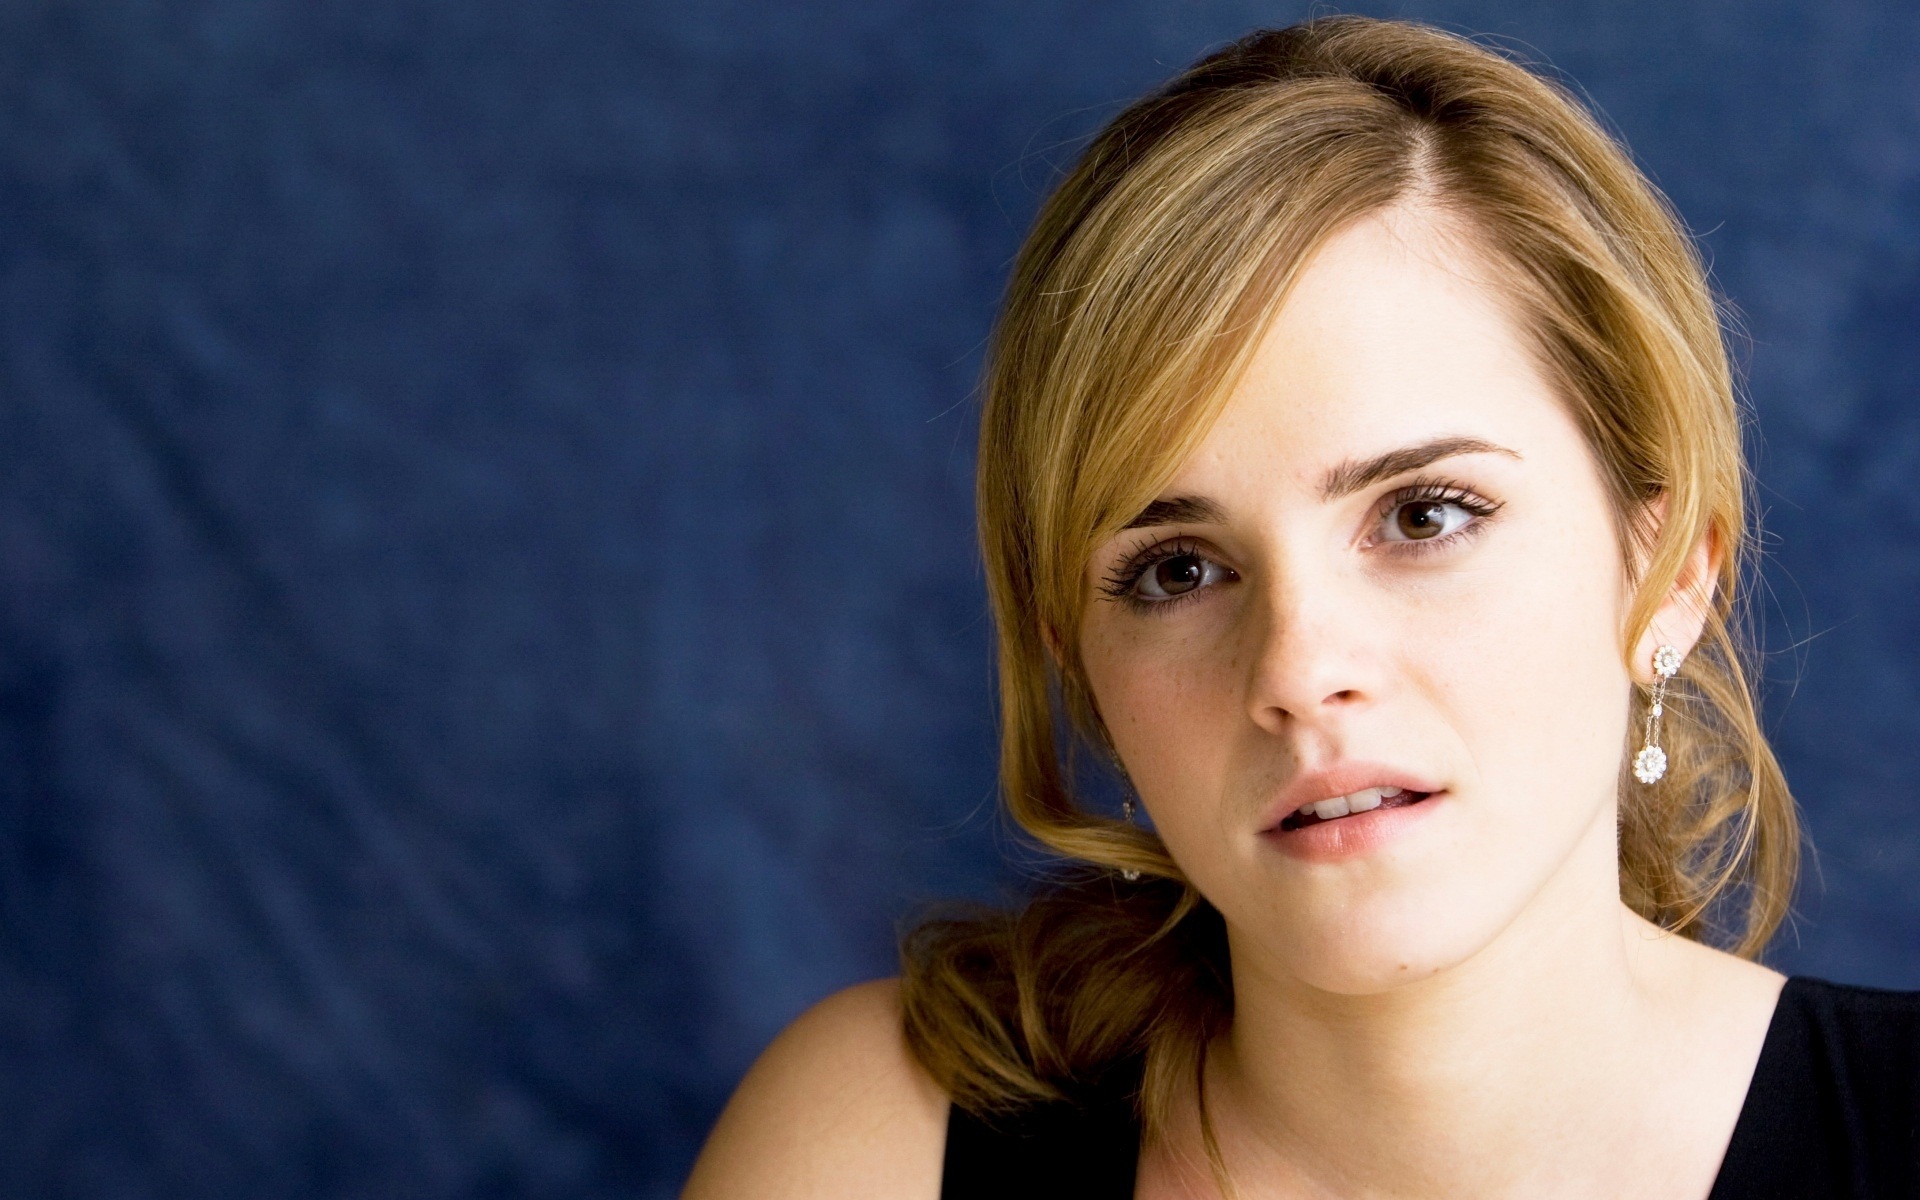 Emma Watson Wallpaper Pictures Pics Photos Image Desktop